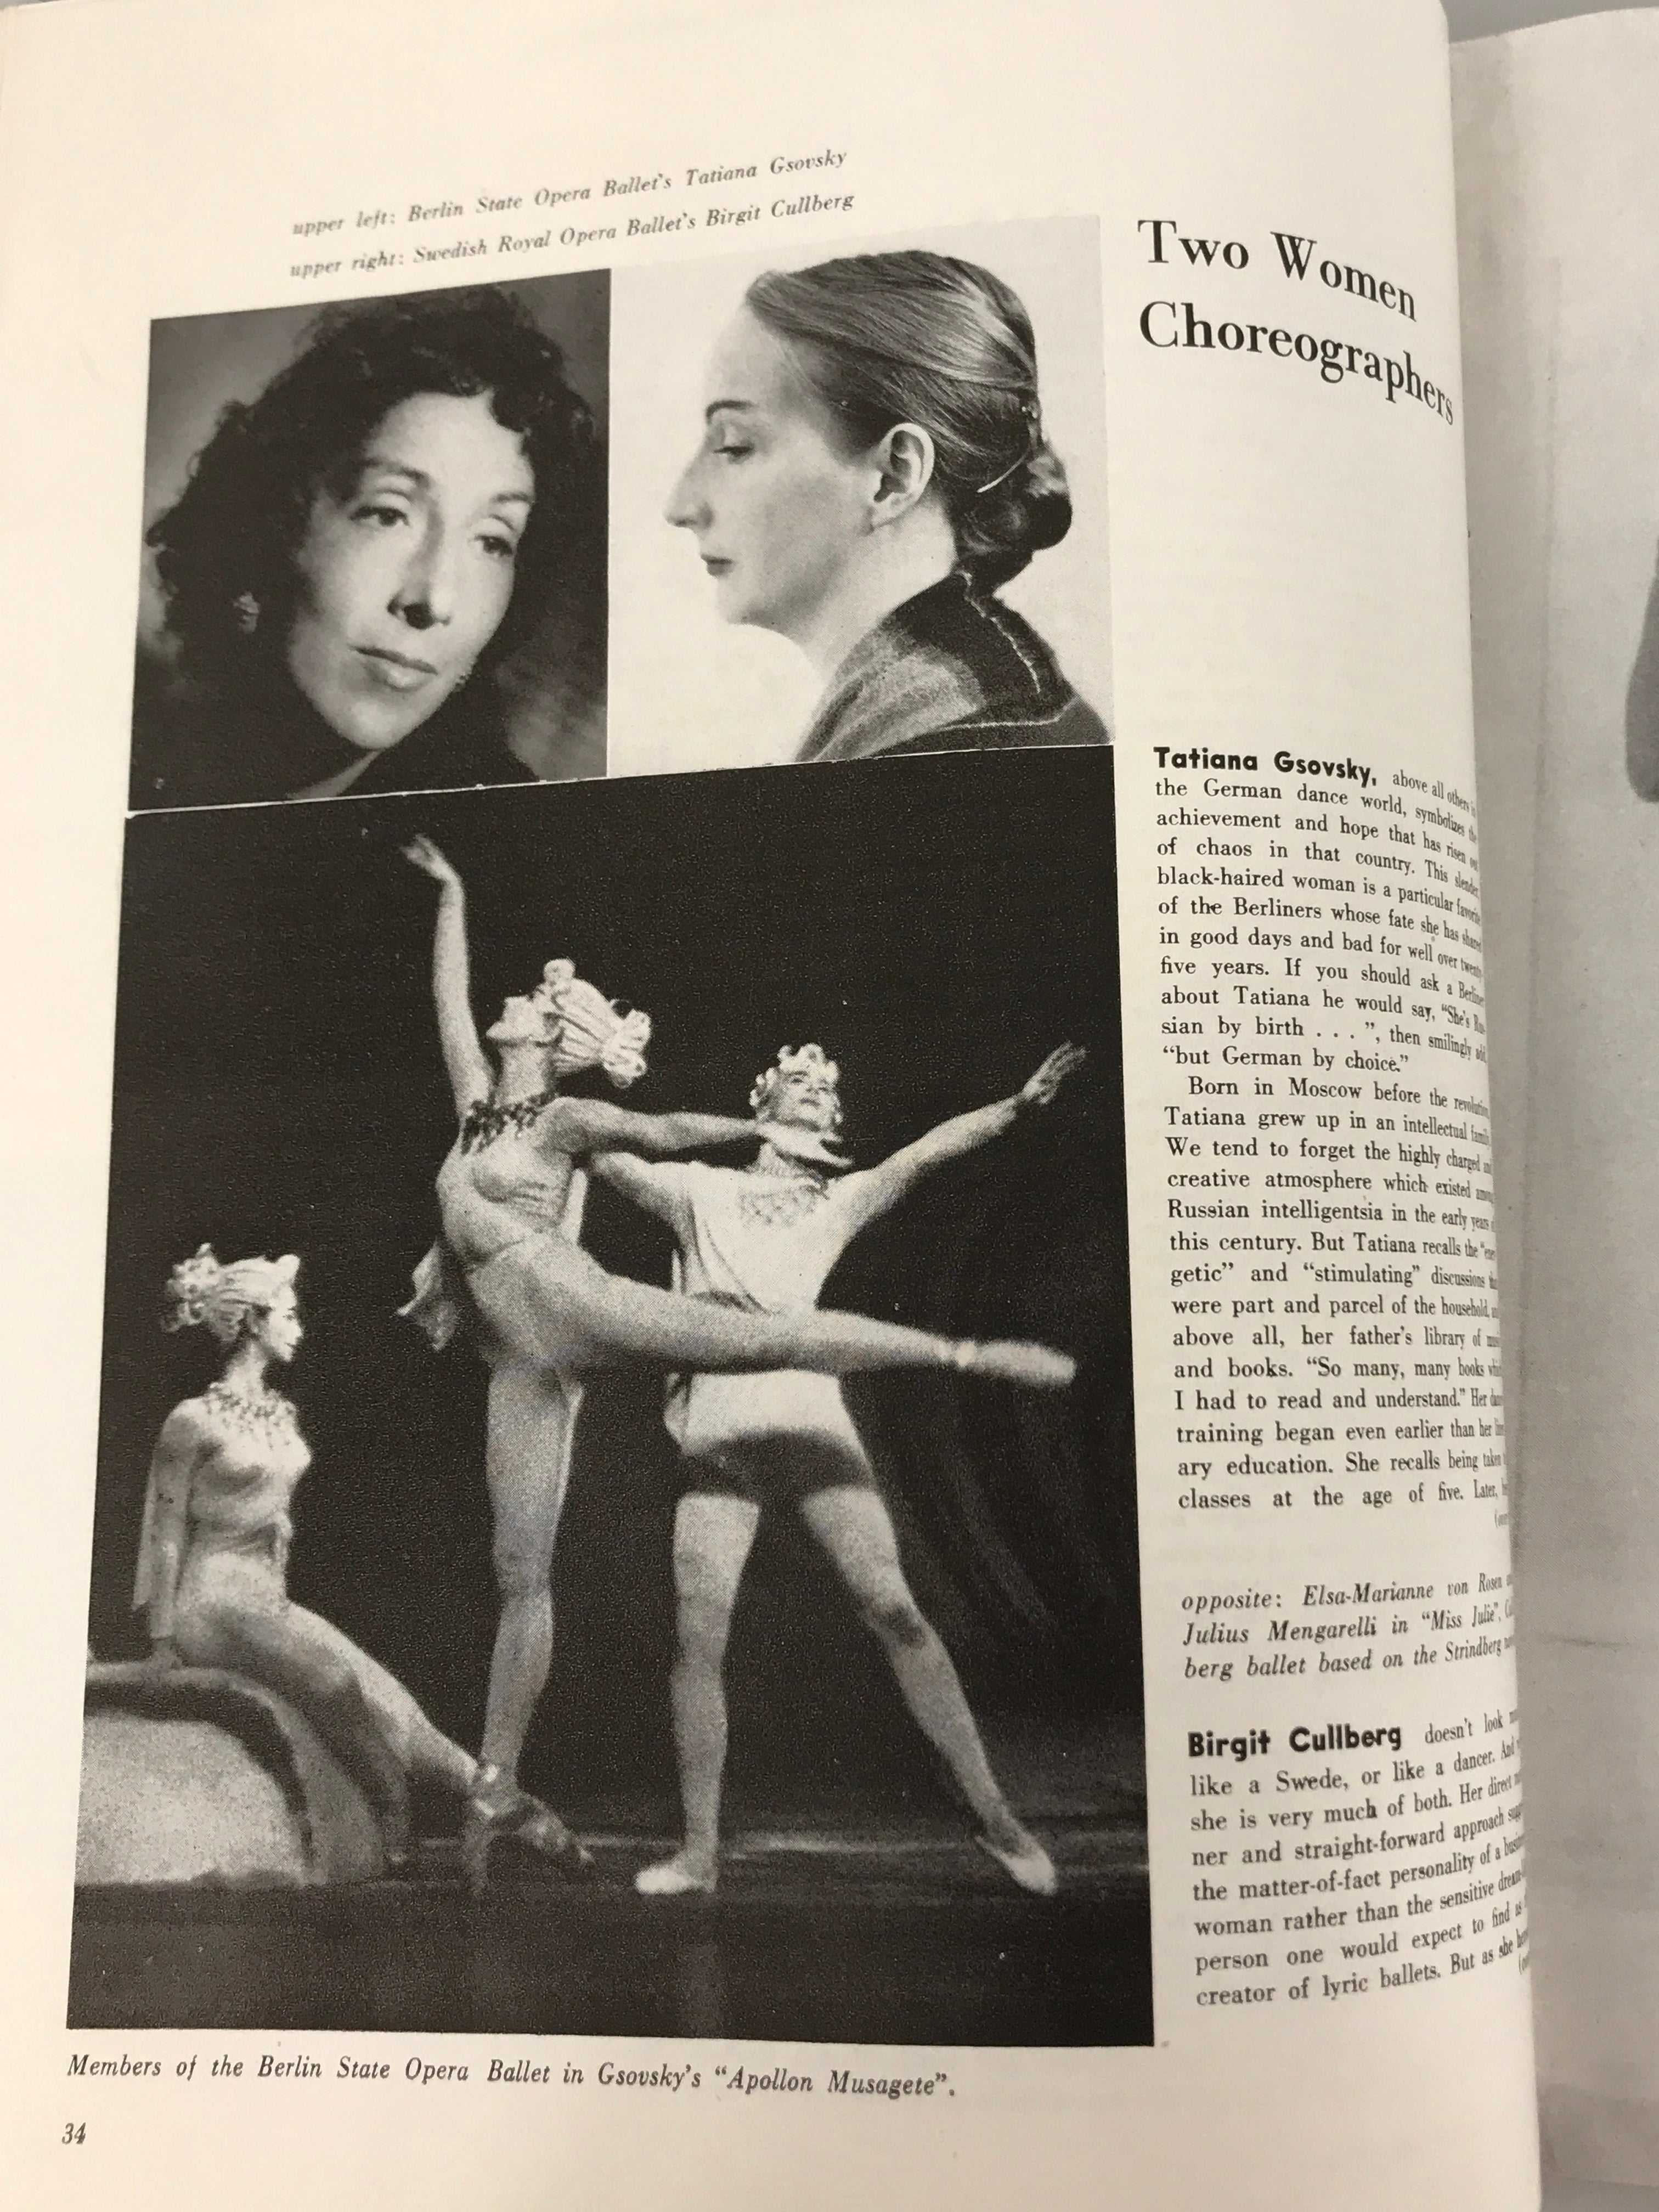 Lot of 7 DANCE MAGAZINE 1954 Including Picasso Cover, Balanchine, Martha Graham, Leslie Caron, Ray Bolger SC